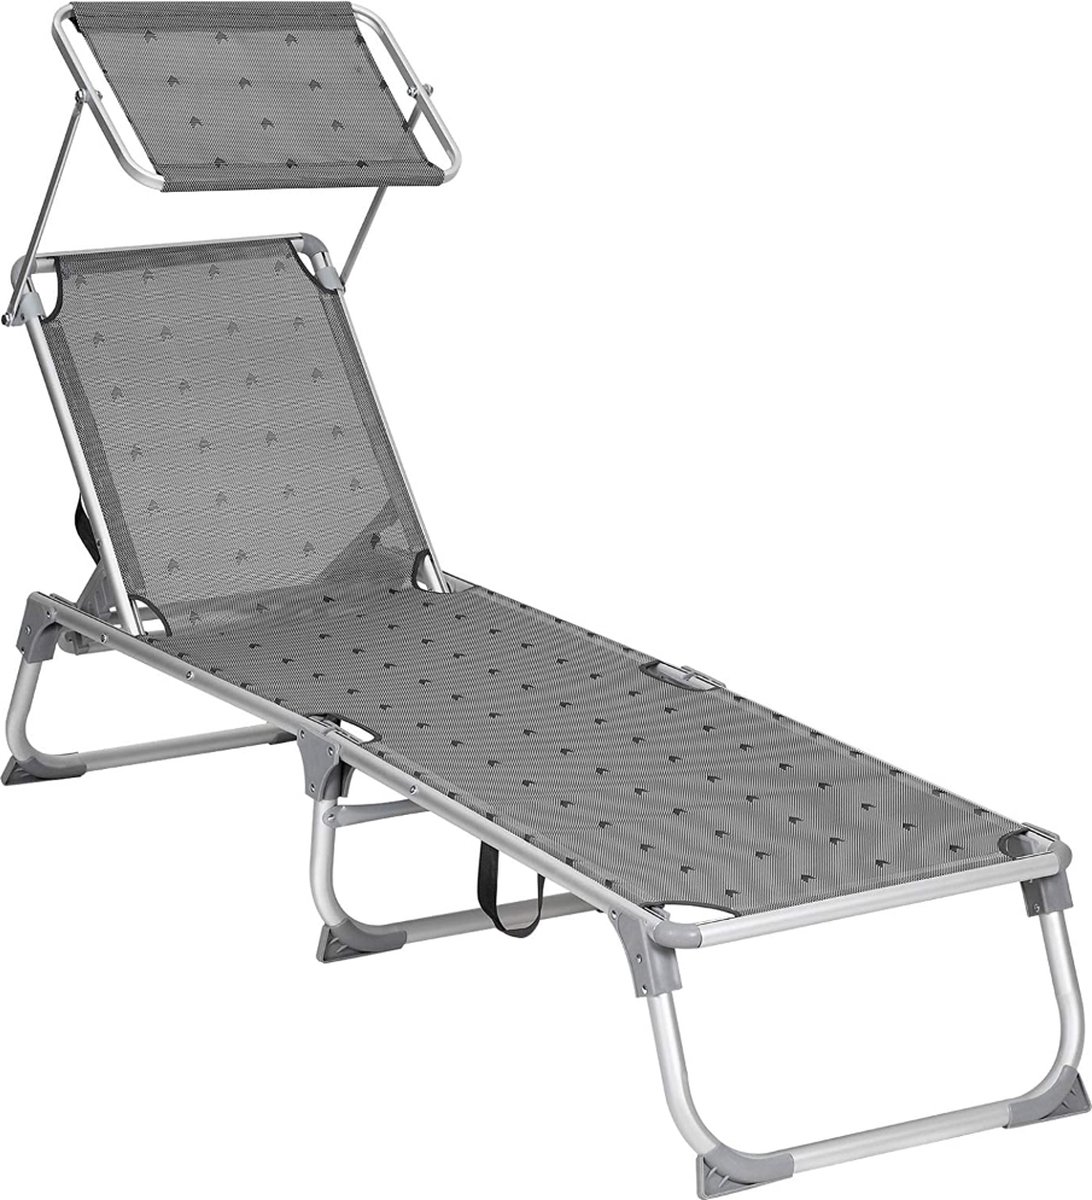 Ligstoel, verstelbare stoel om te zonnen, opvouwbaar, 55 x 193 x 31 cm, draagt tot 150 kg - vogelpatroon, grijs